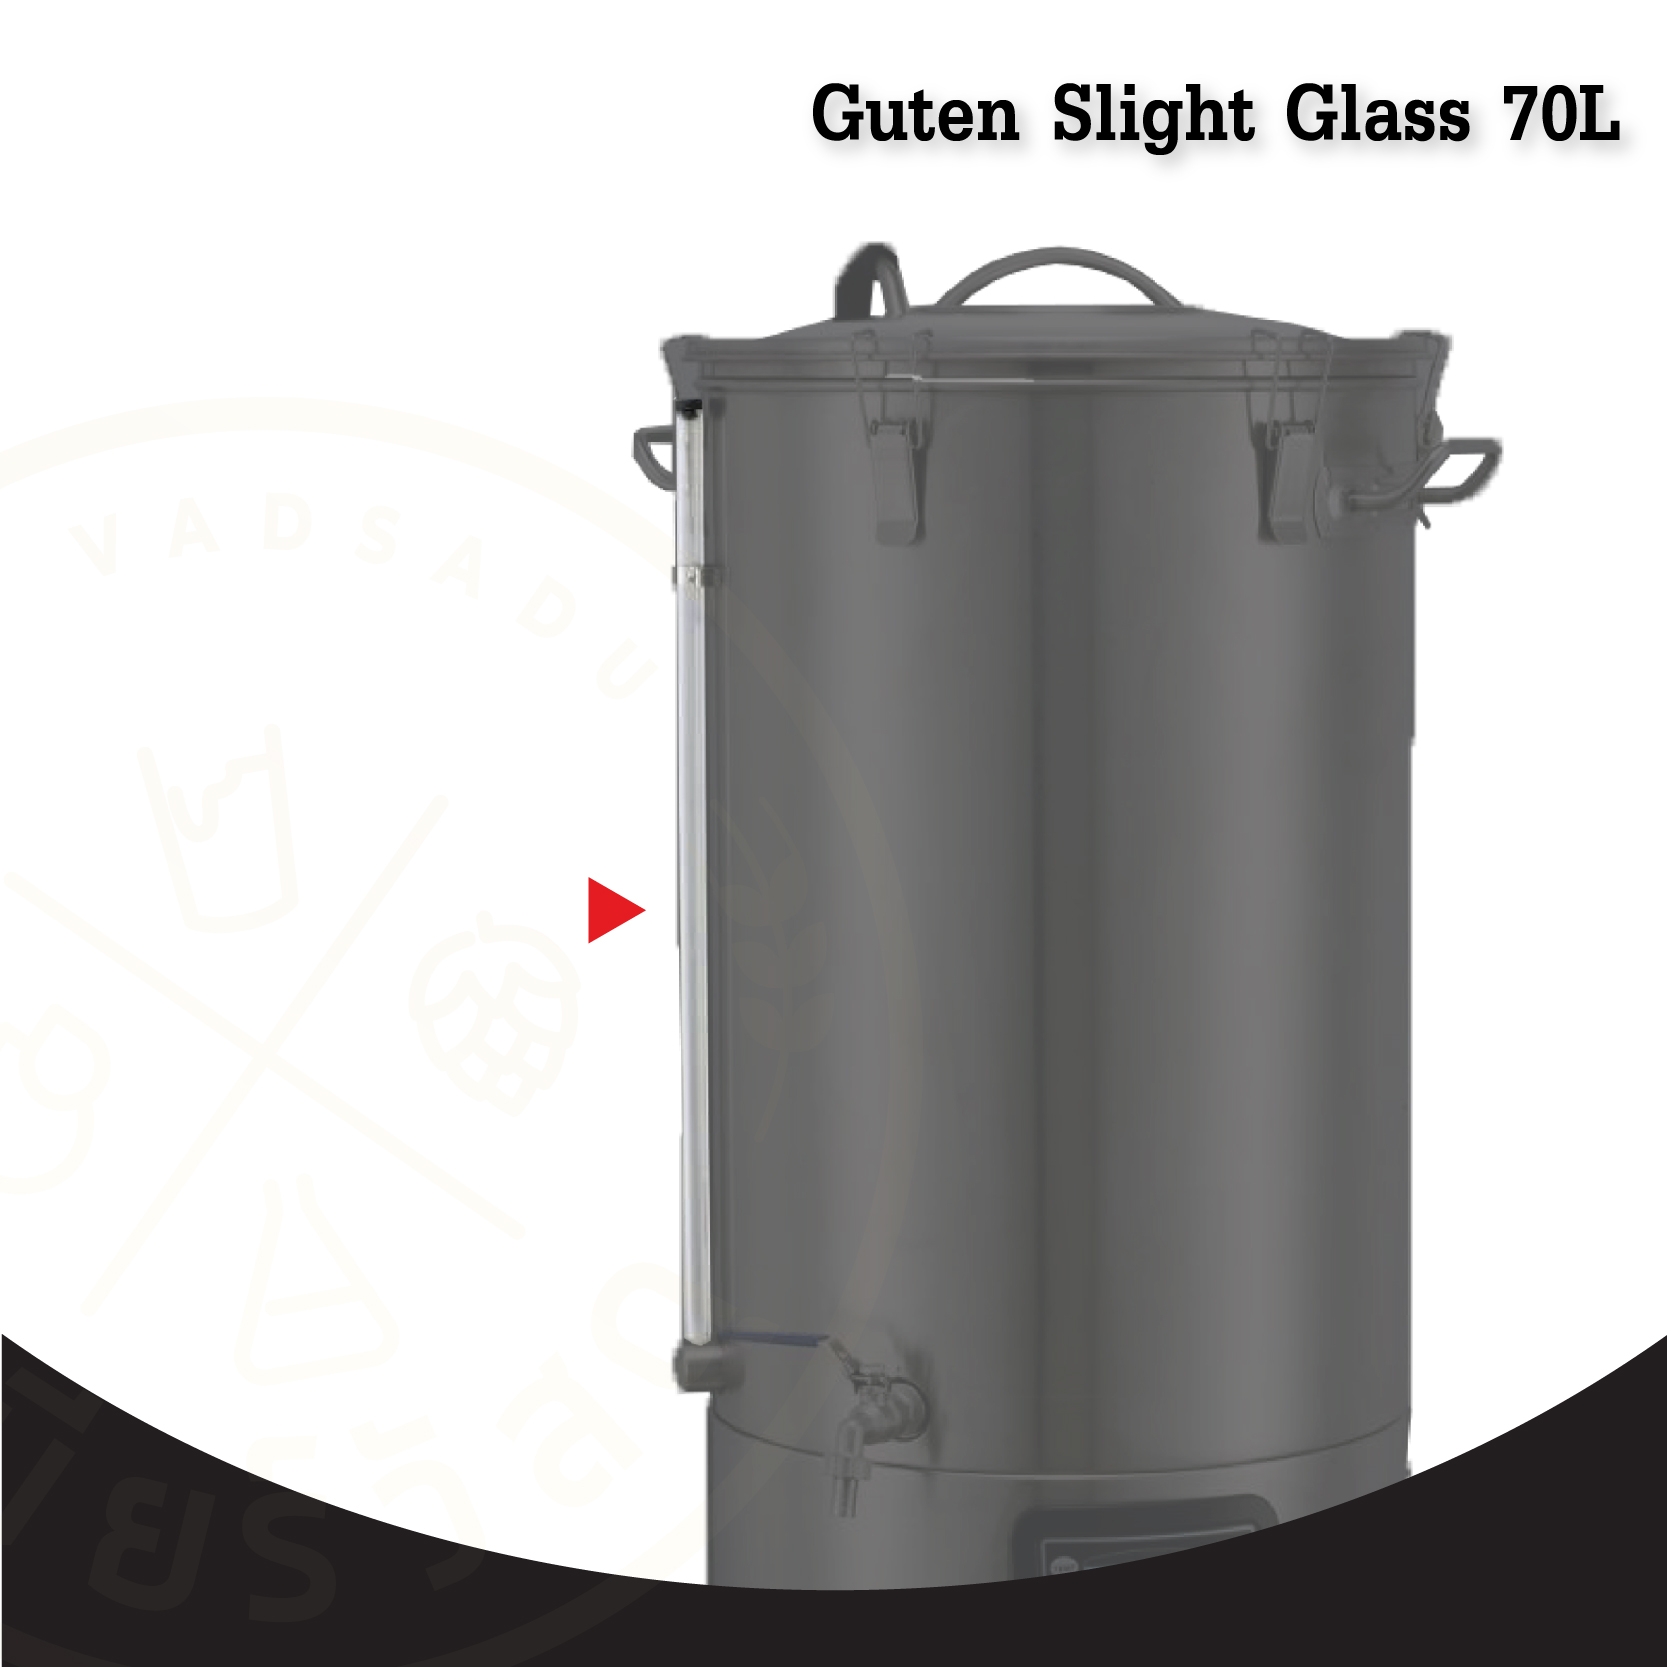 Guten Slight Glass 70L